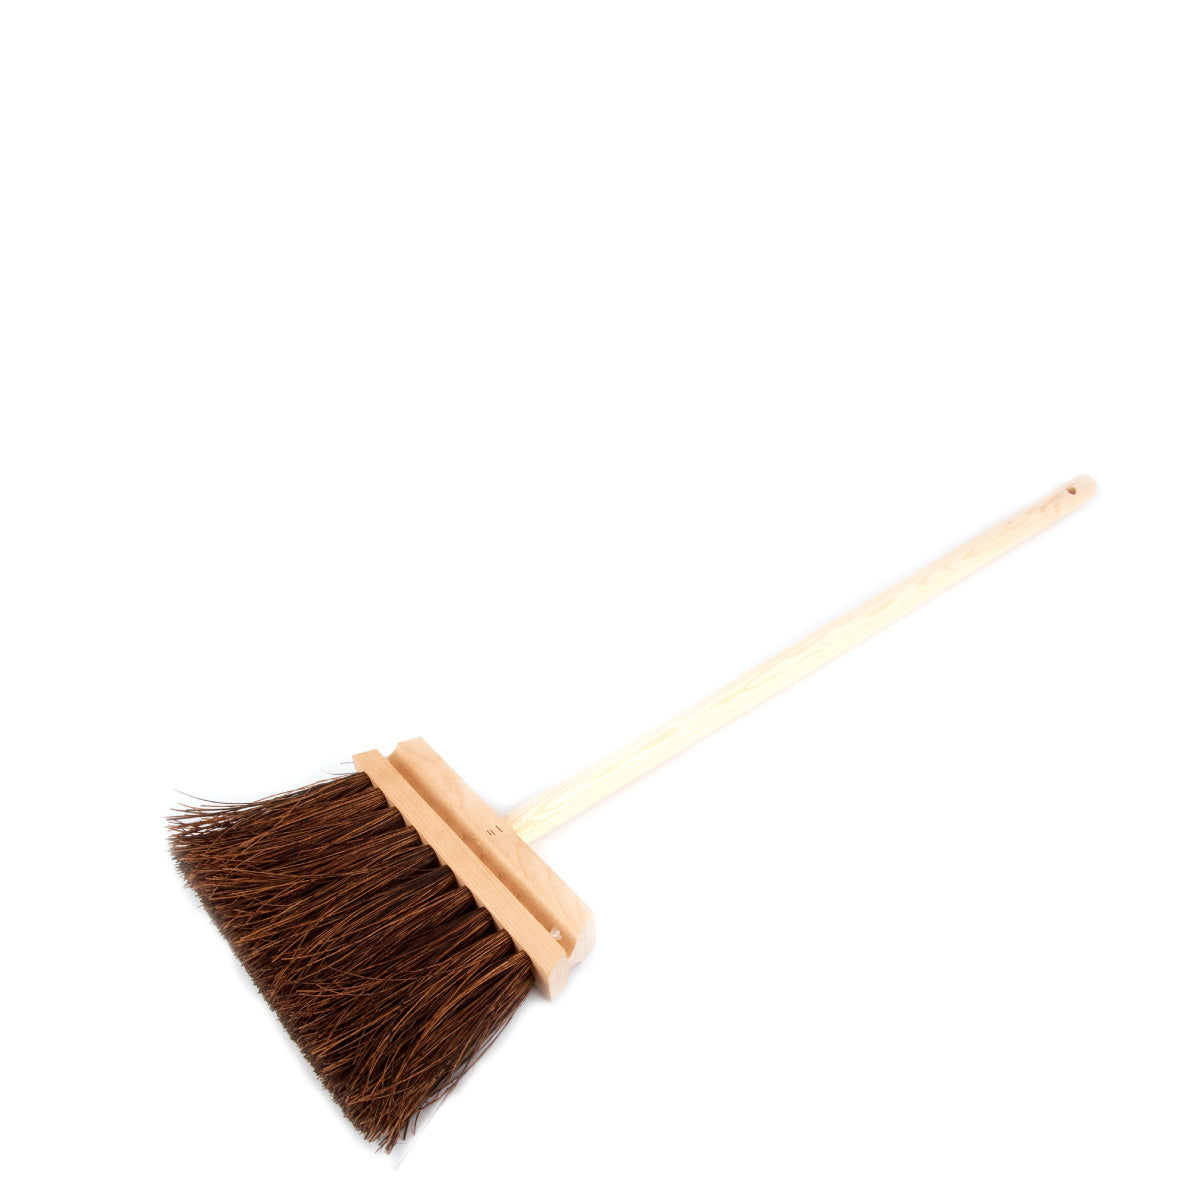 Wood Broom - Short